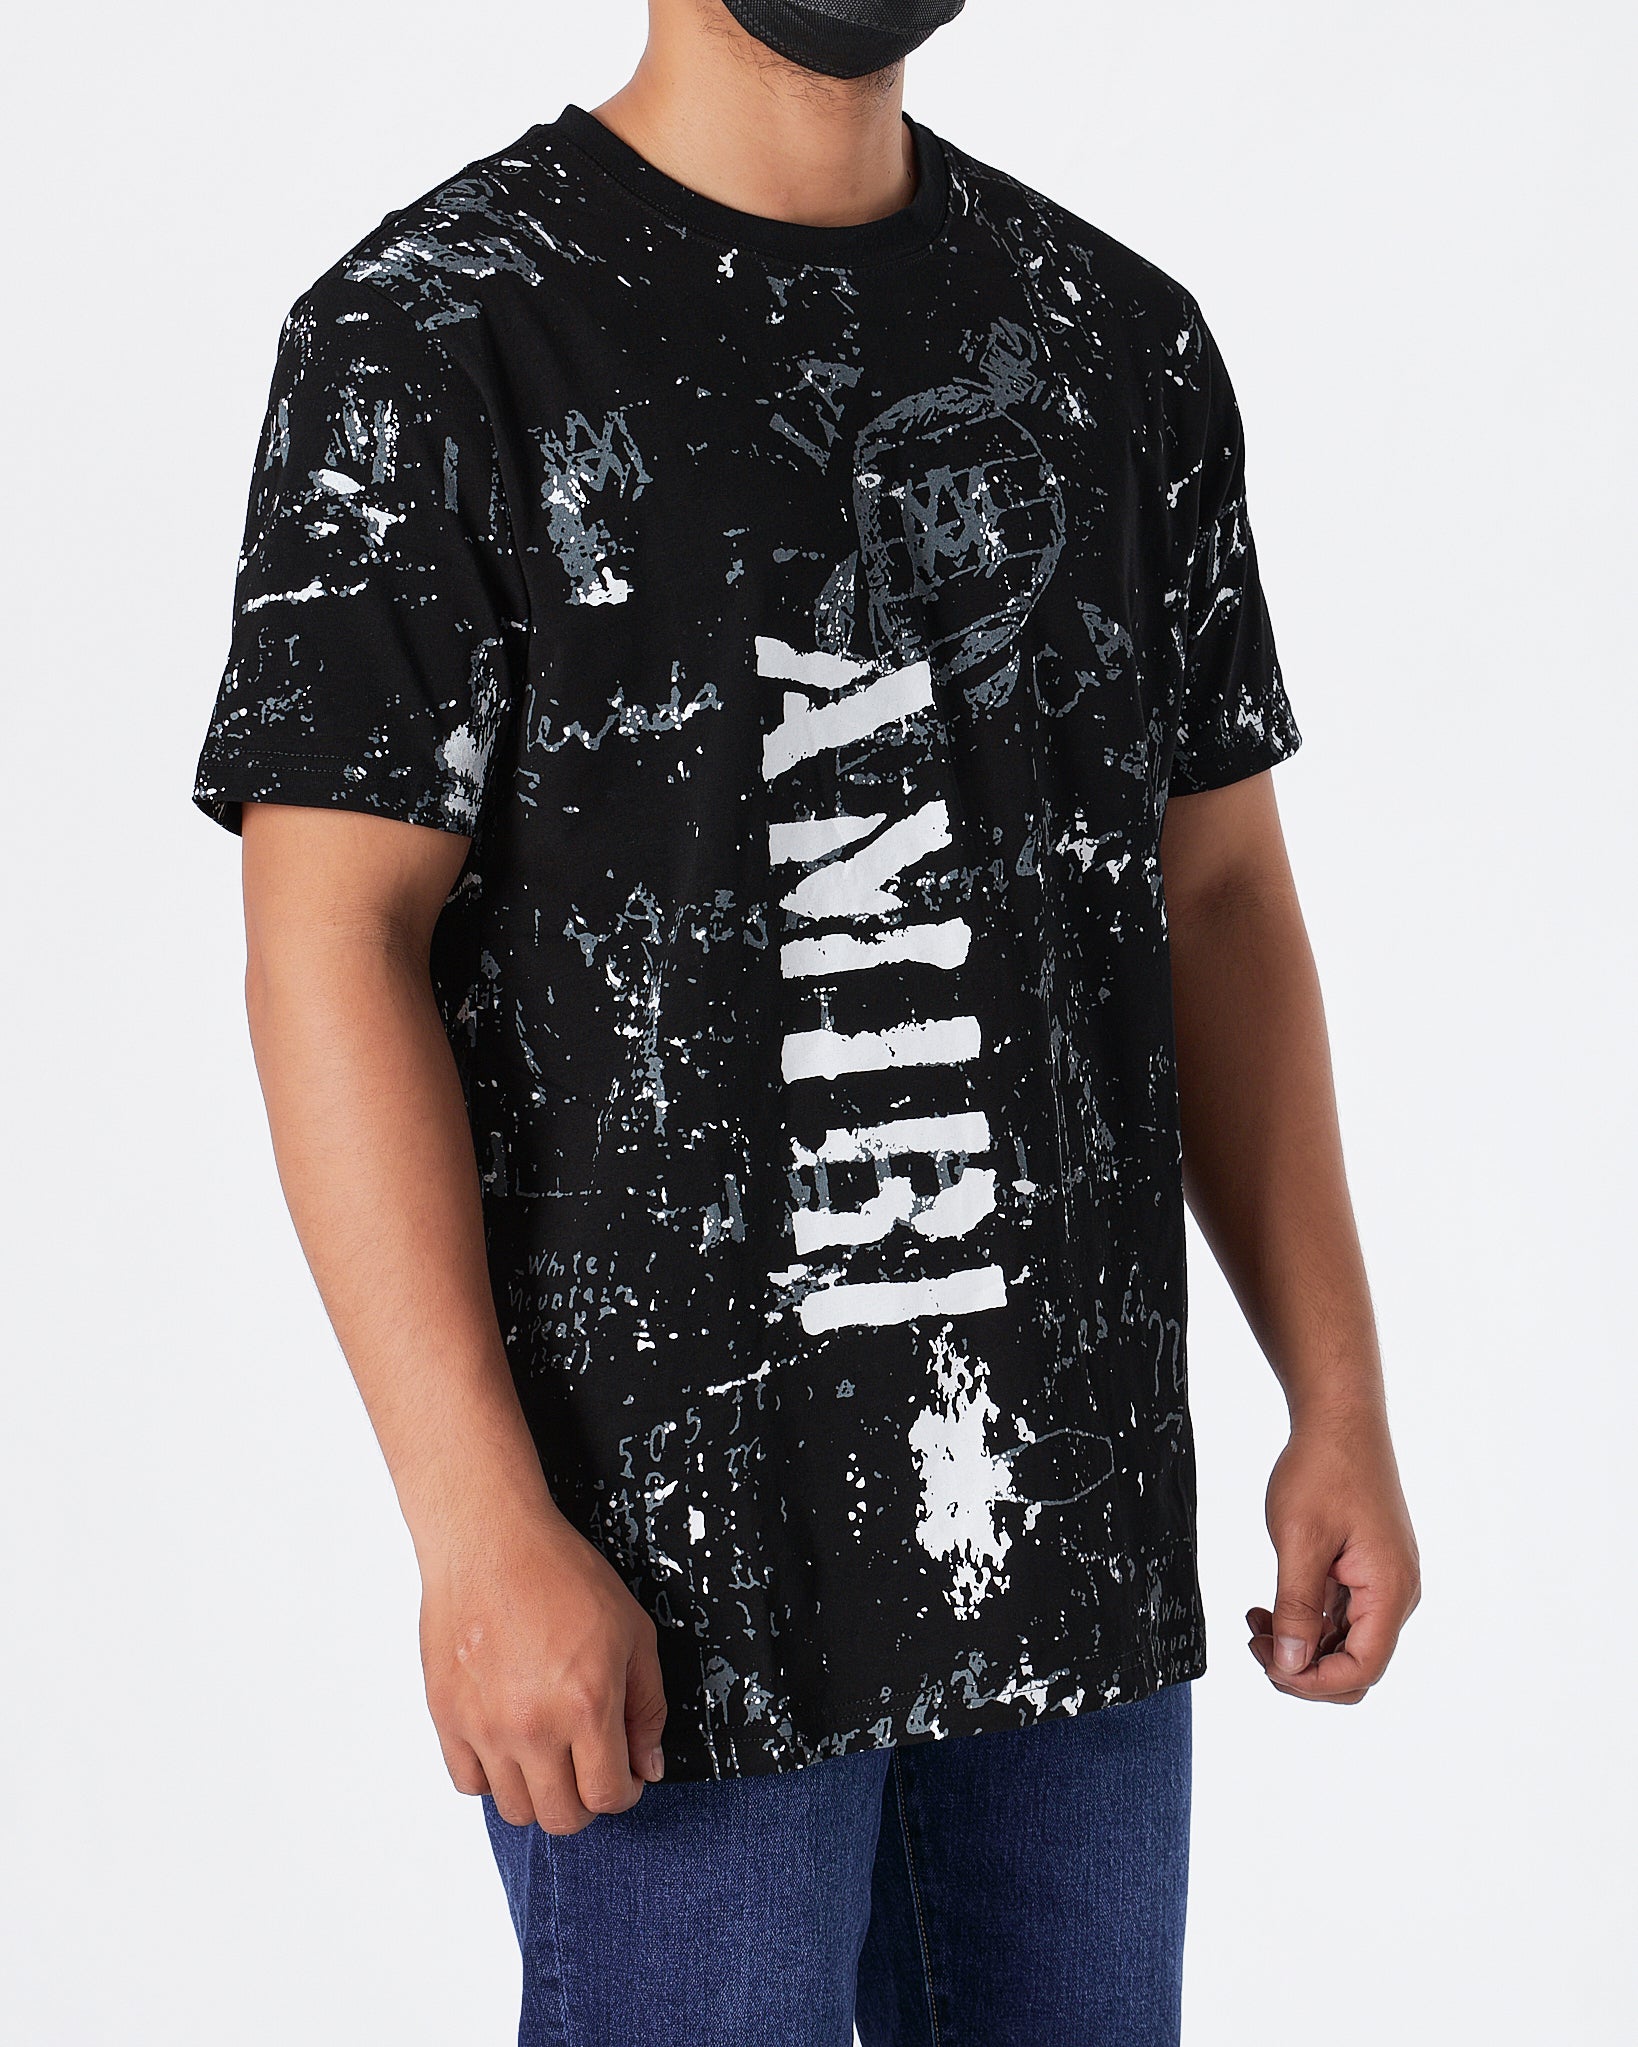 MOI OUTFIT-ARM Ink Splash Men Black T-Shirt 24.90